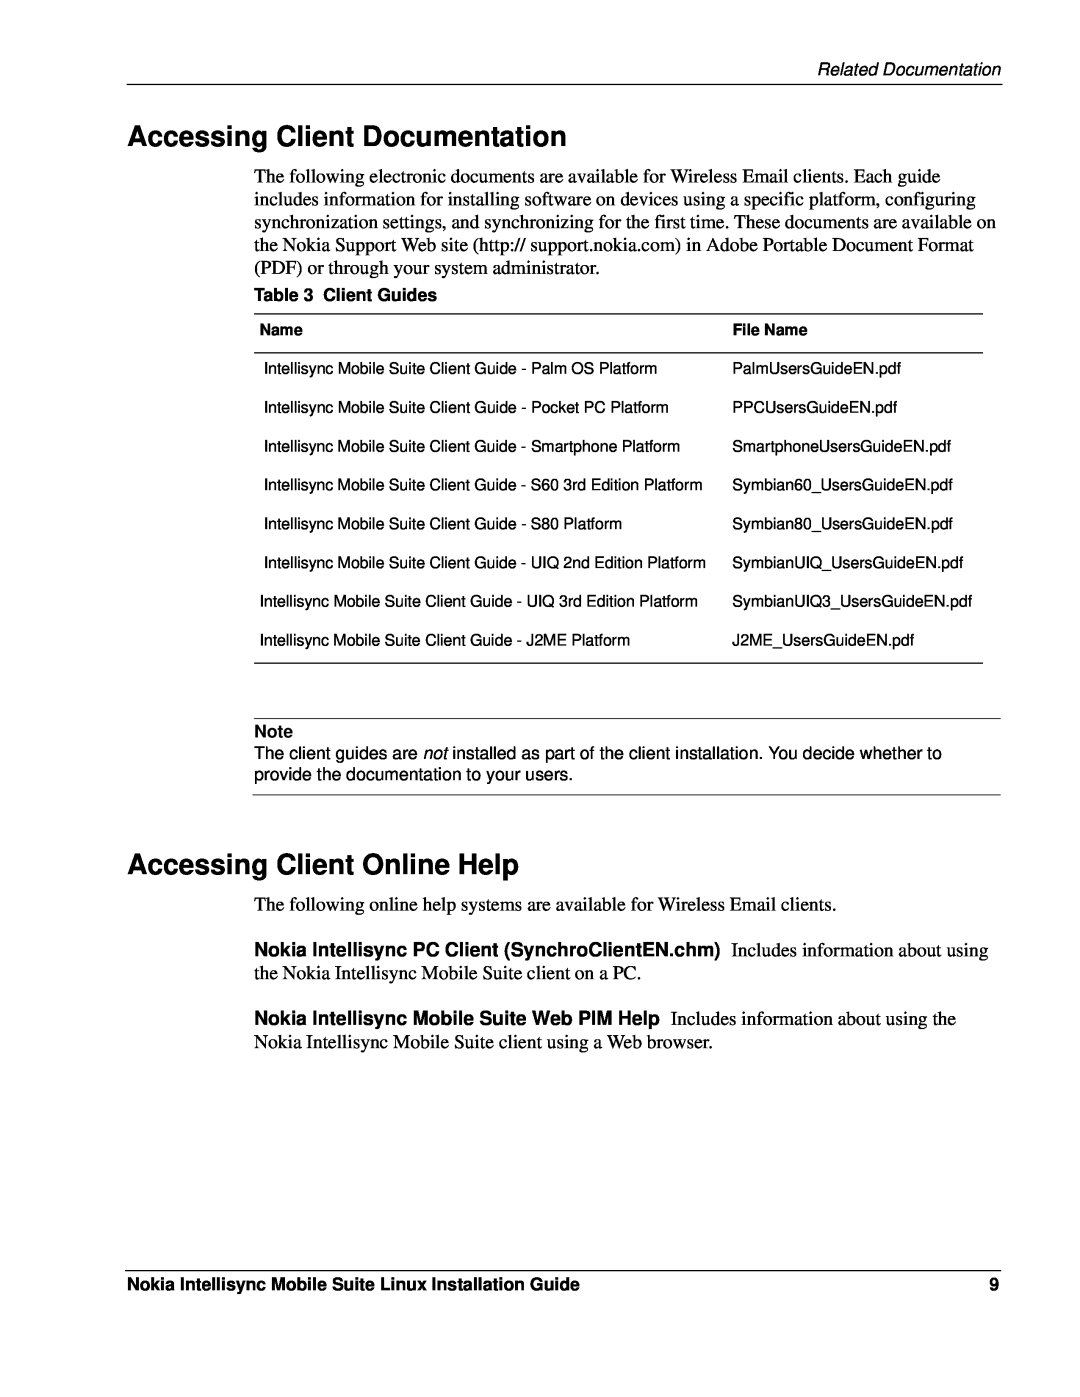 Nokia 8.5 manual Accessing Client Documentation, Accessing Client Online Help, Client Guides 